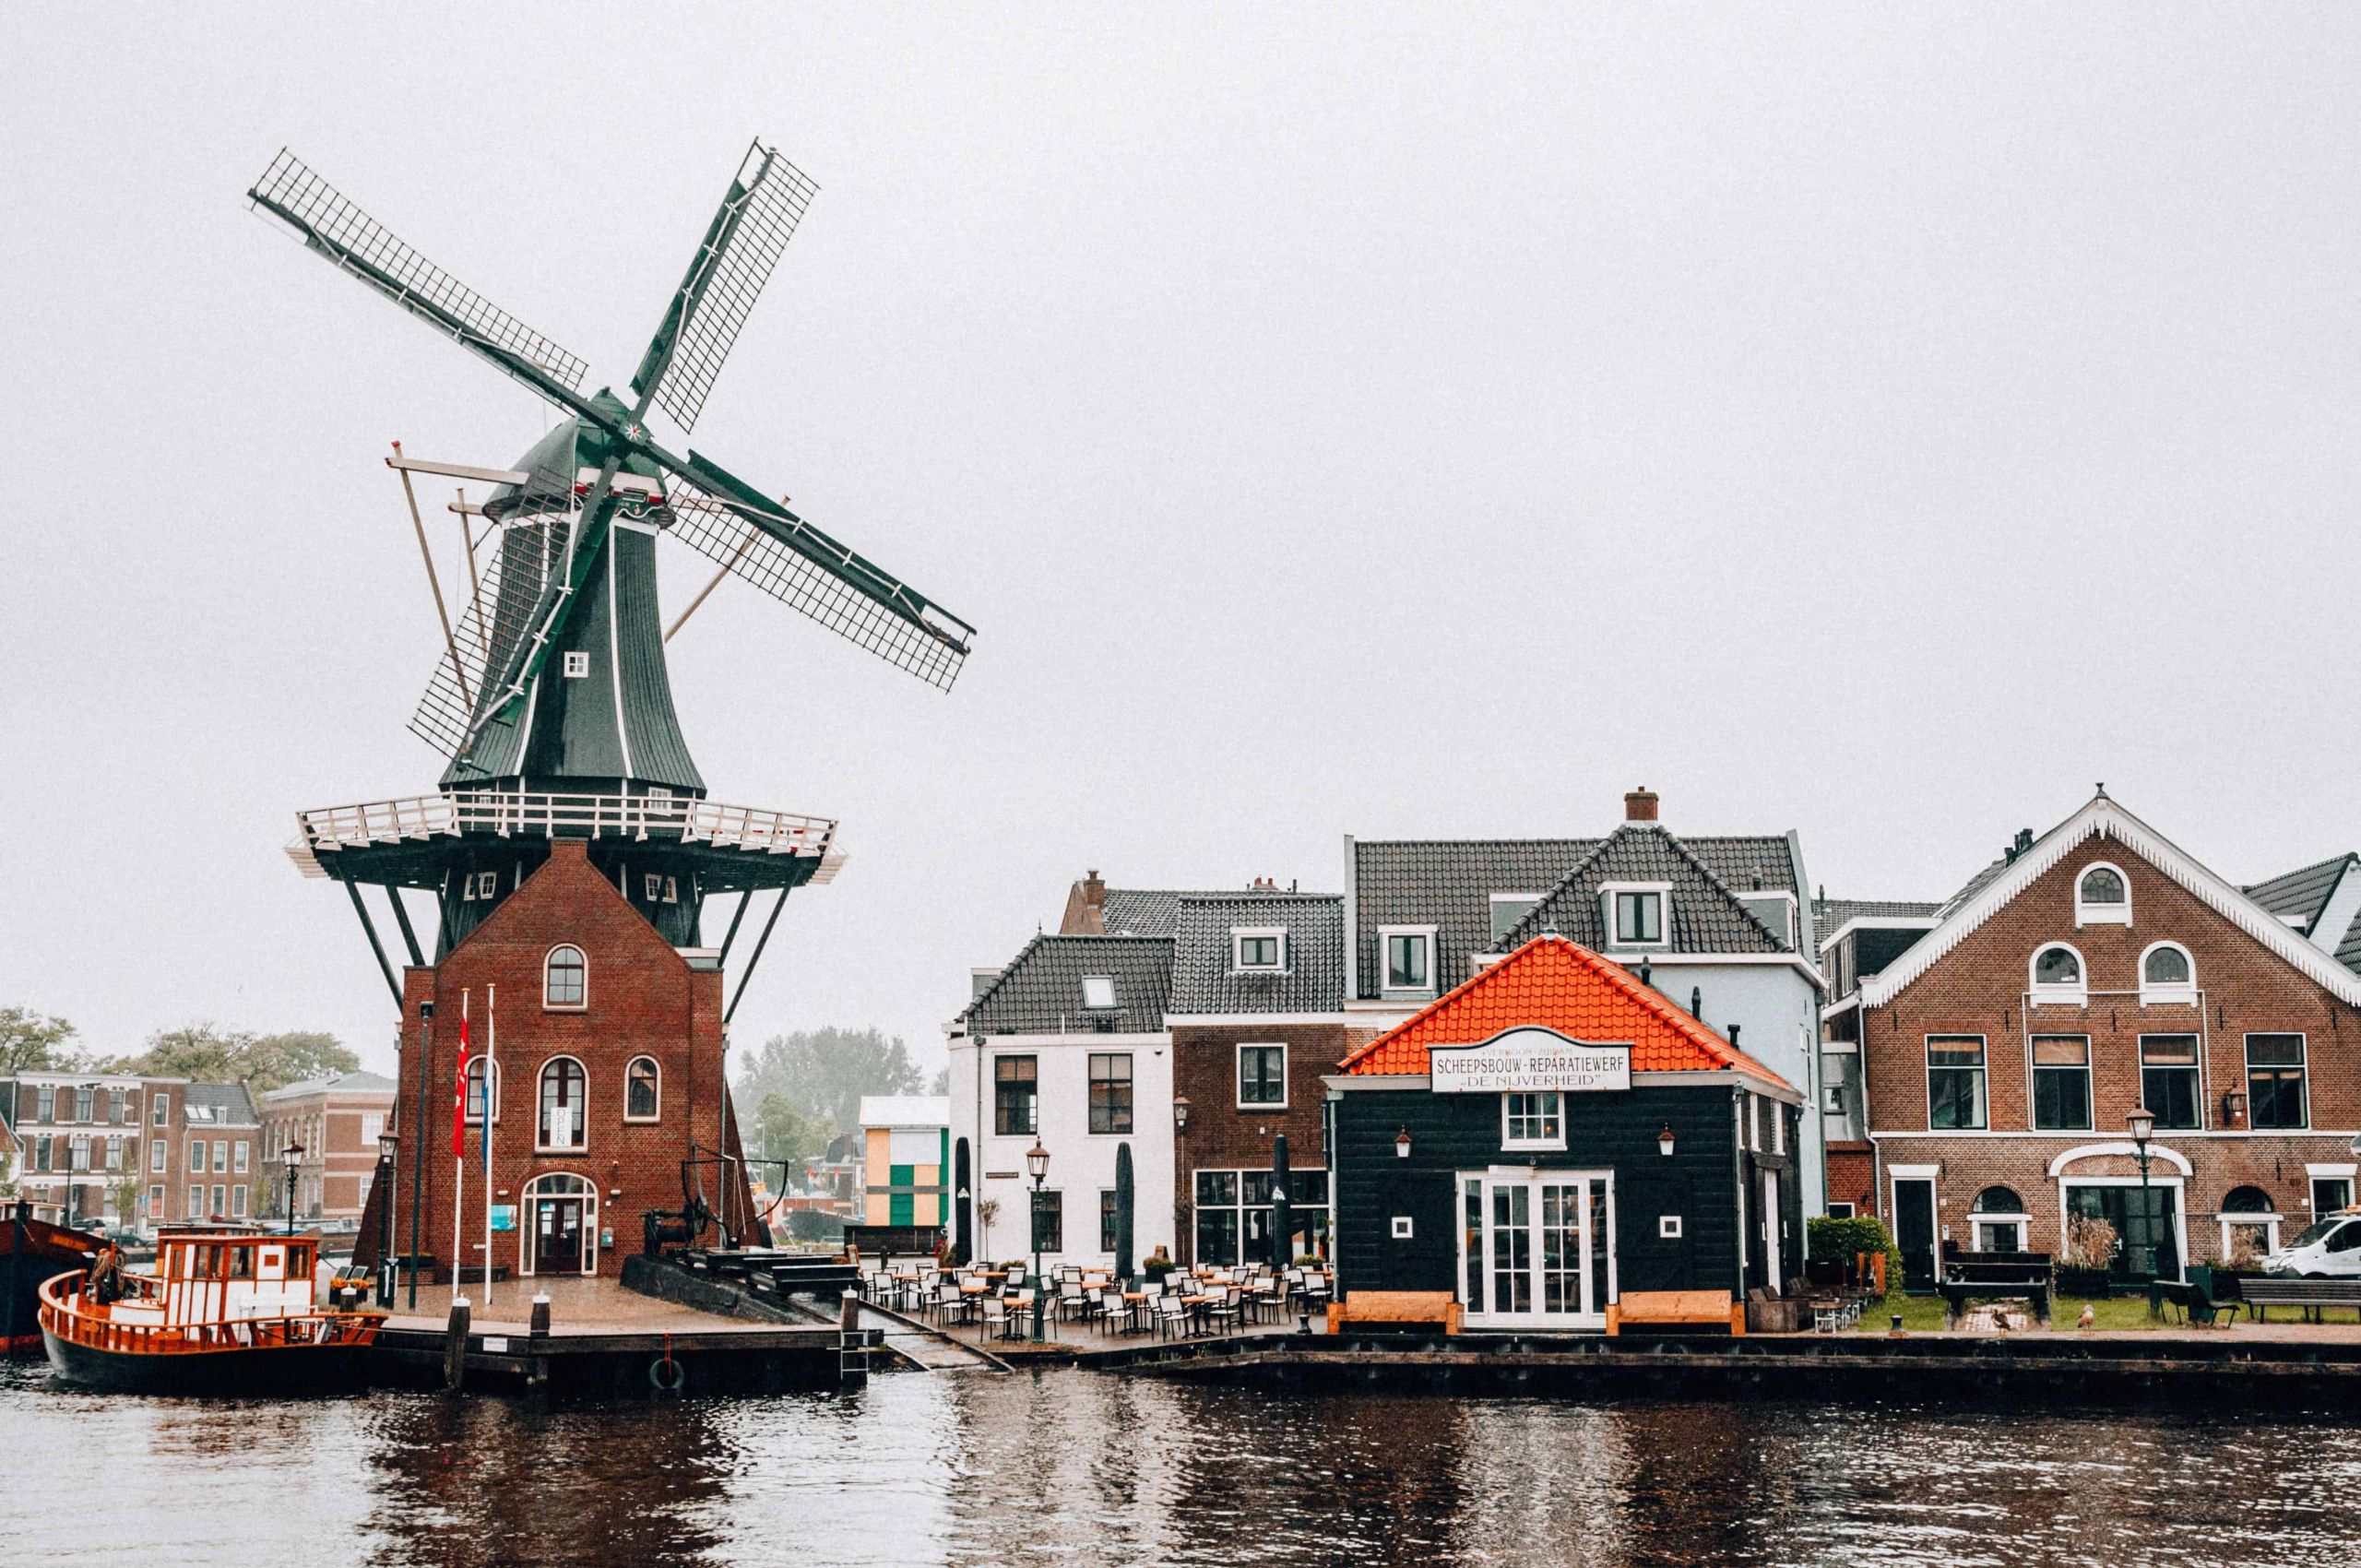 Netherlands travel guide - Windmills